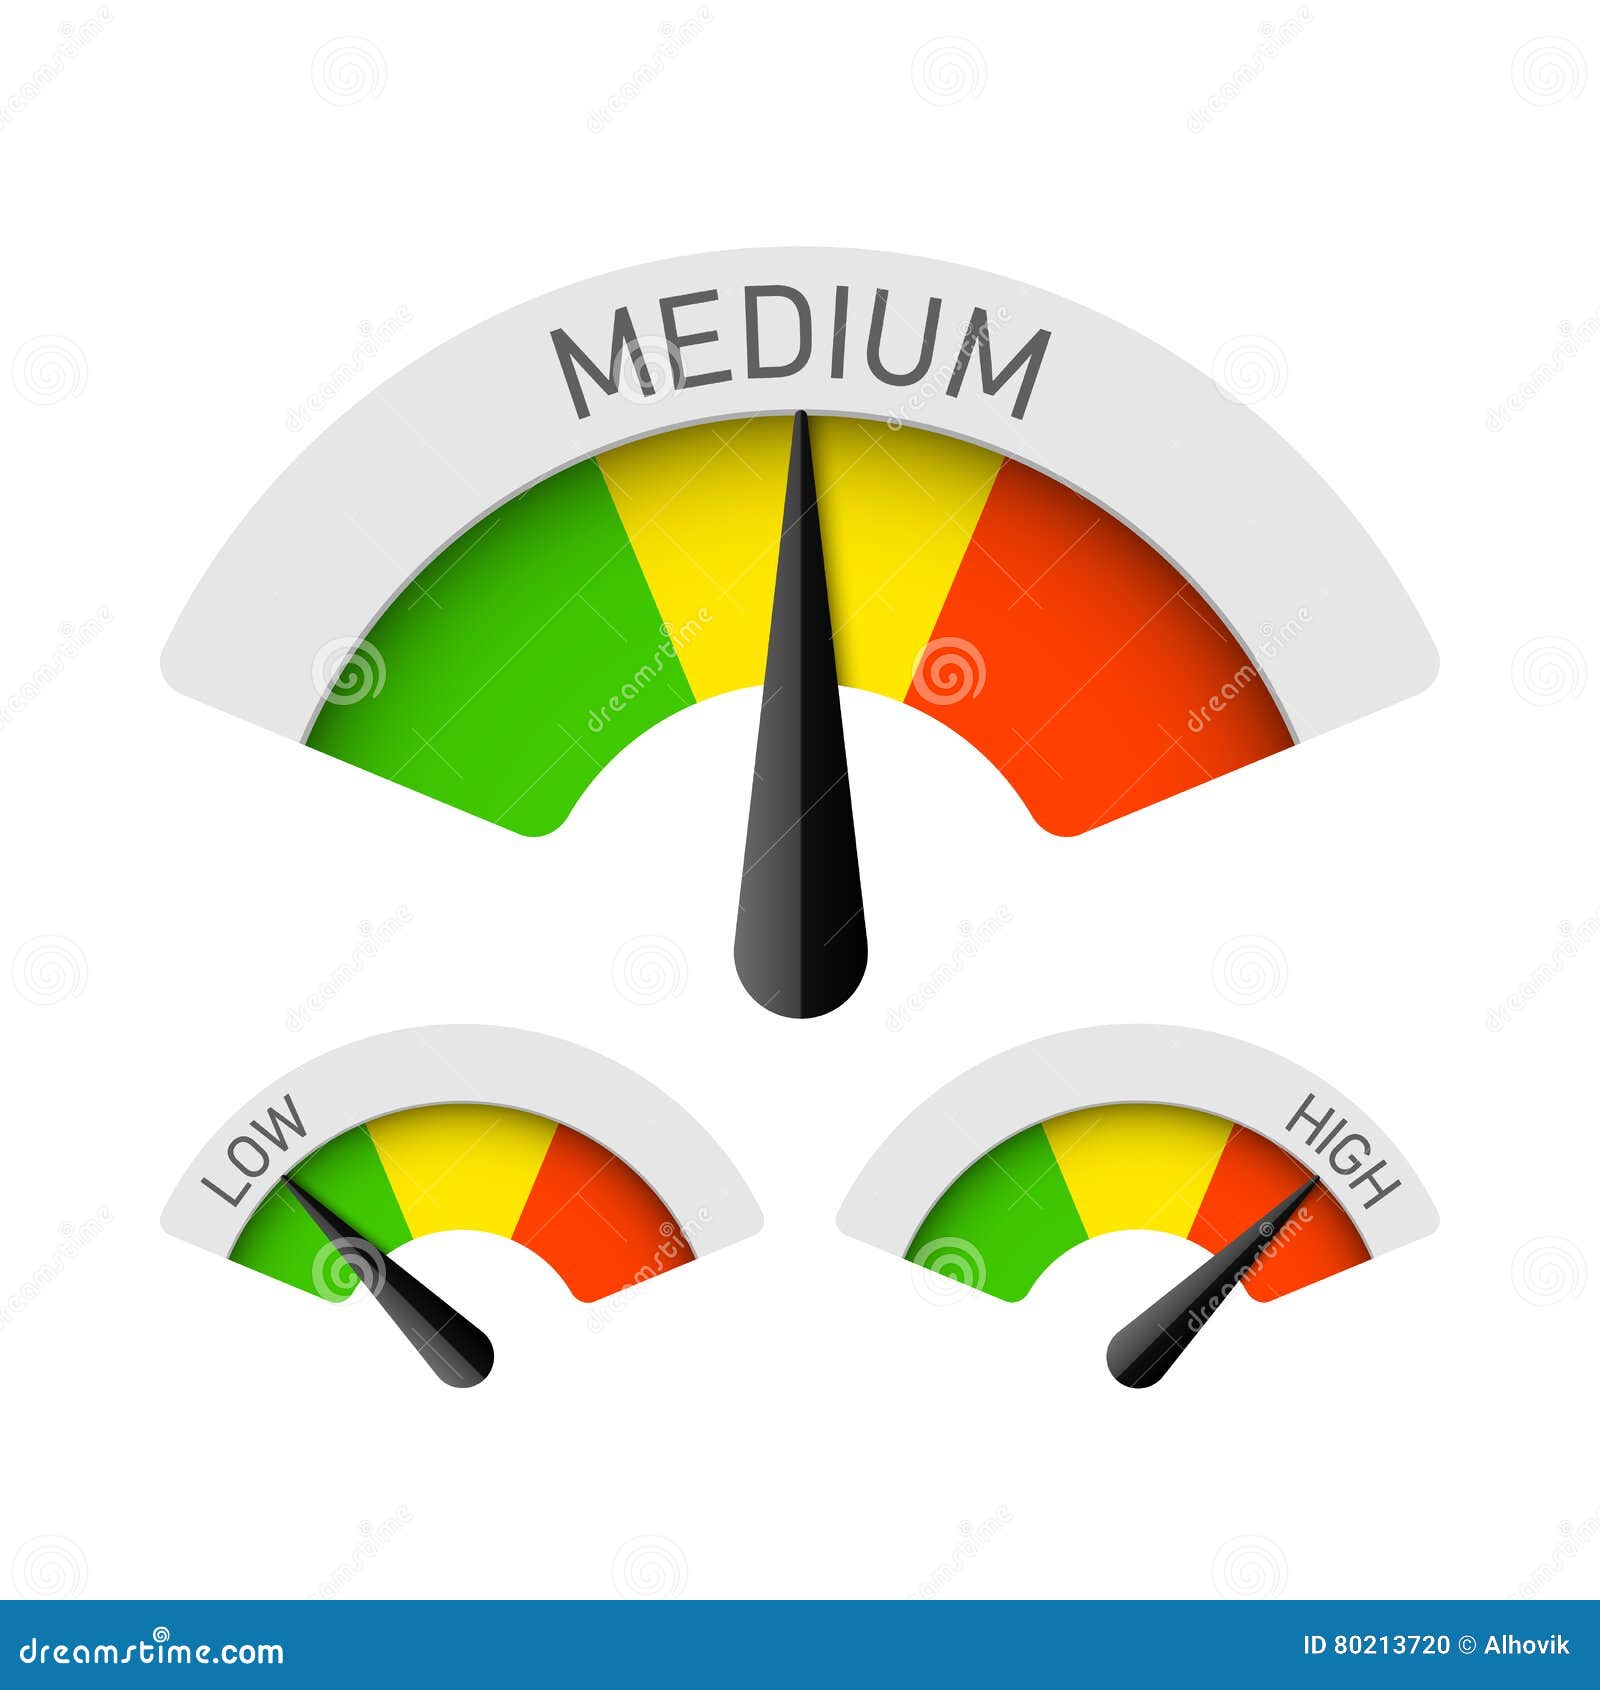 low, medium and high gauges